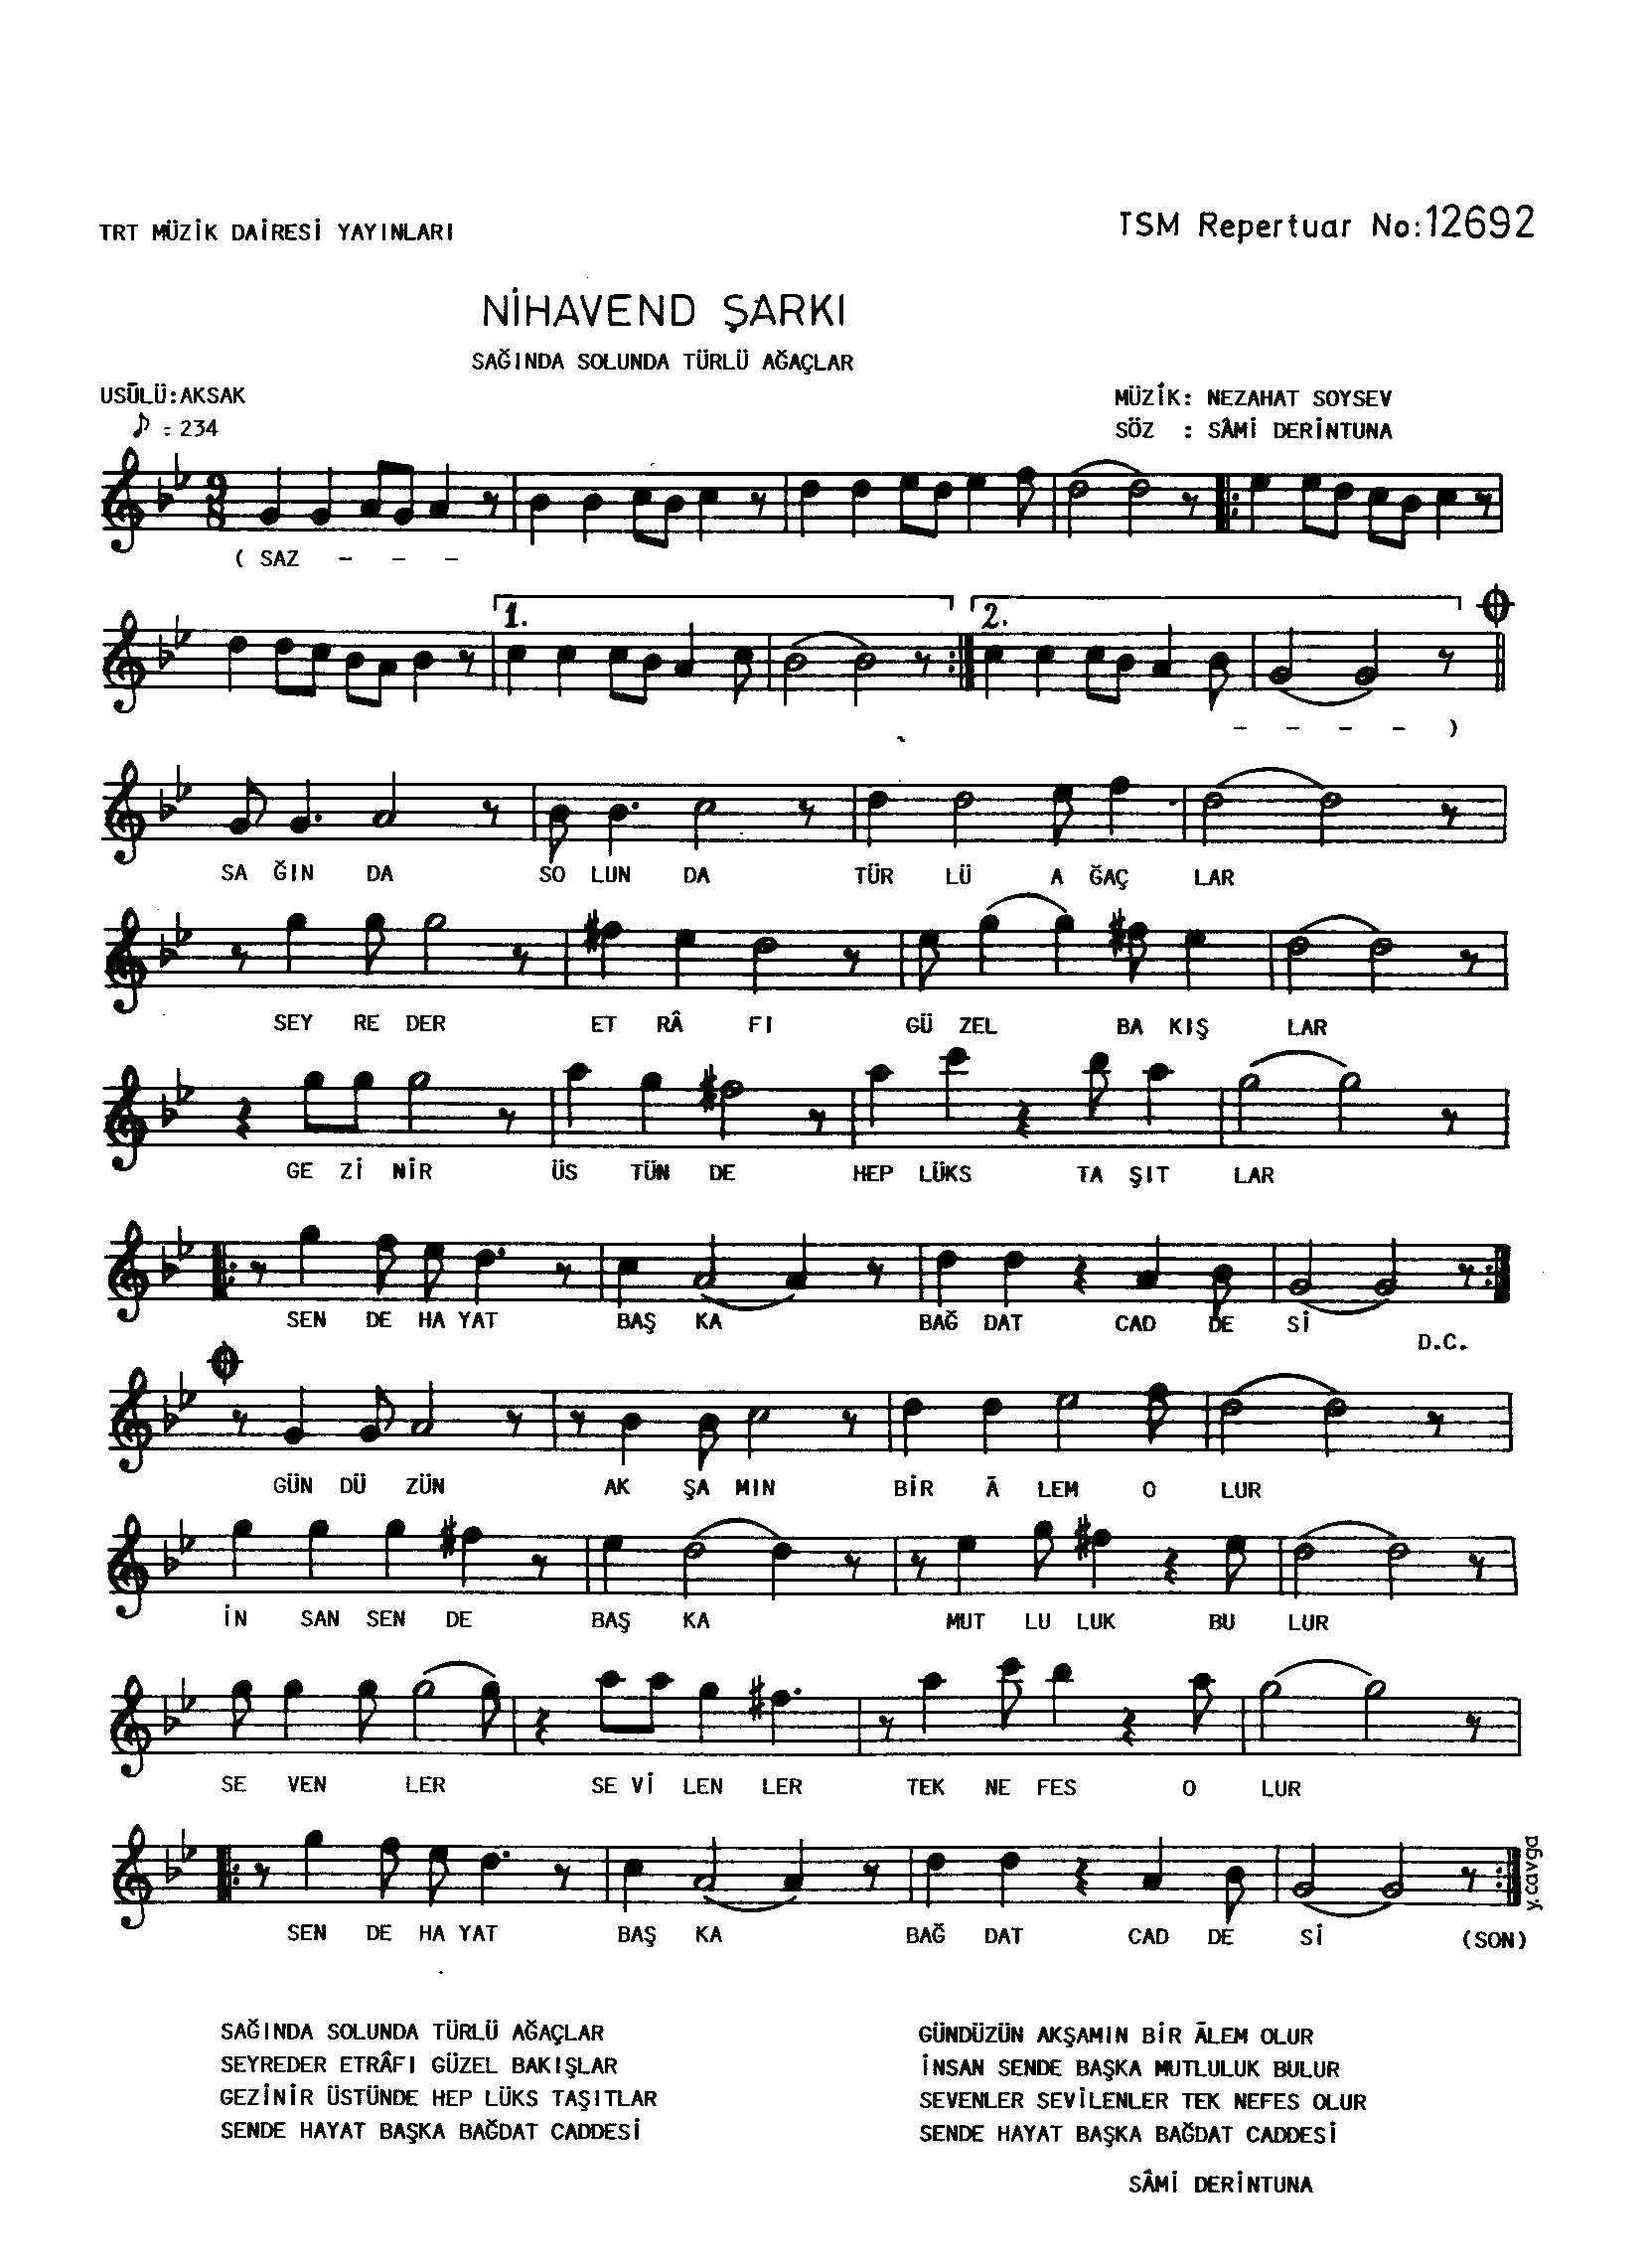 Nihâvend - Şarkı - Nezahât Soysev - Sayfa 1